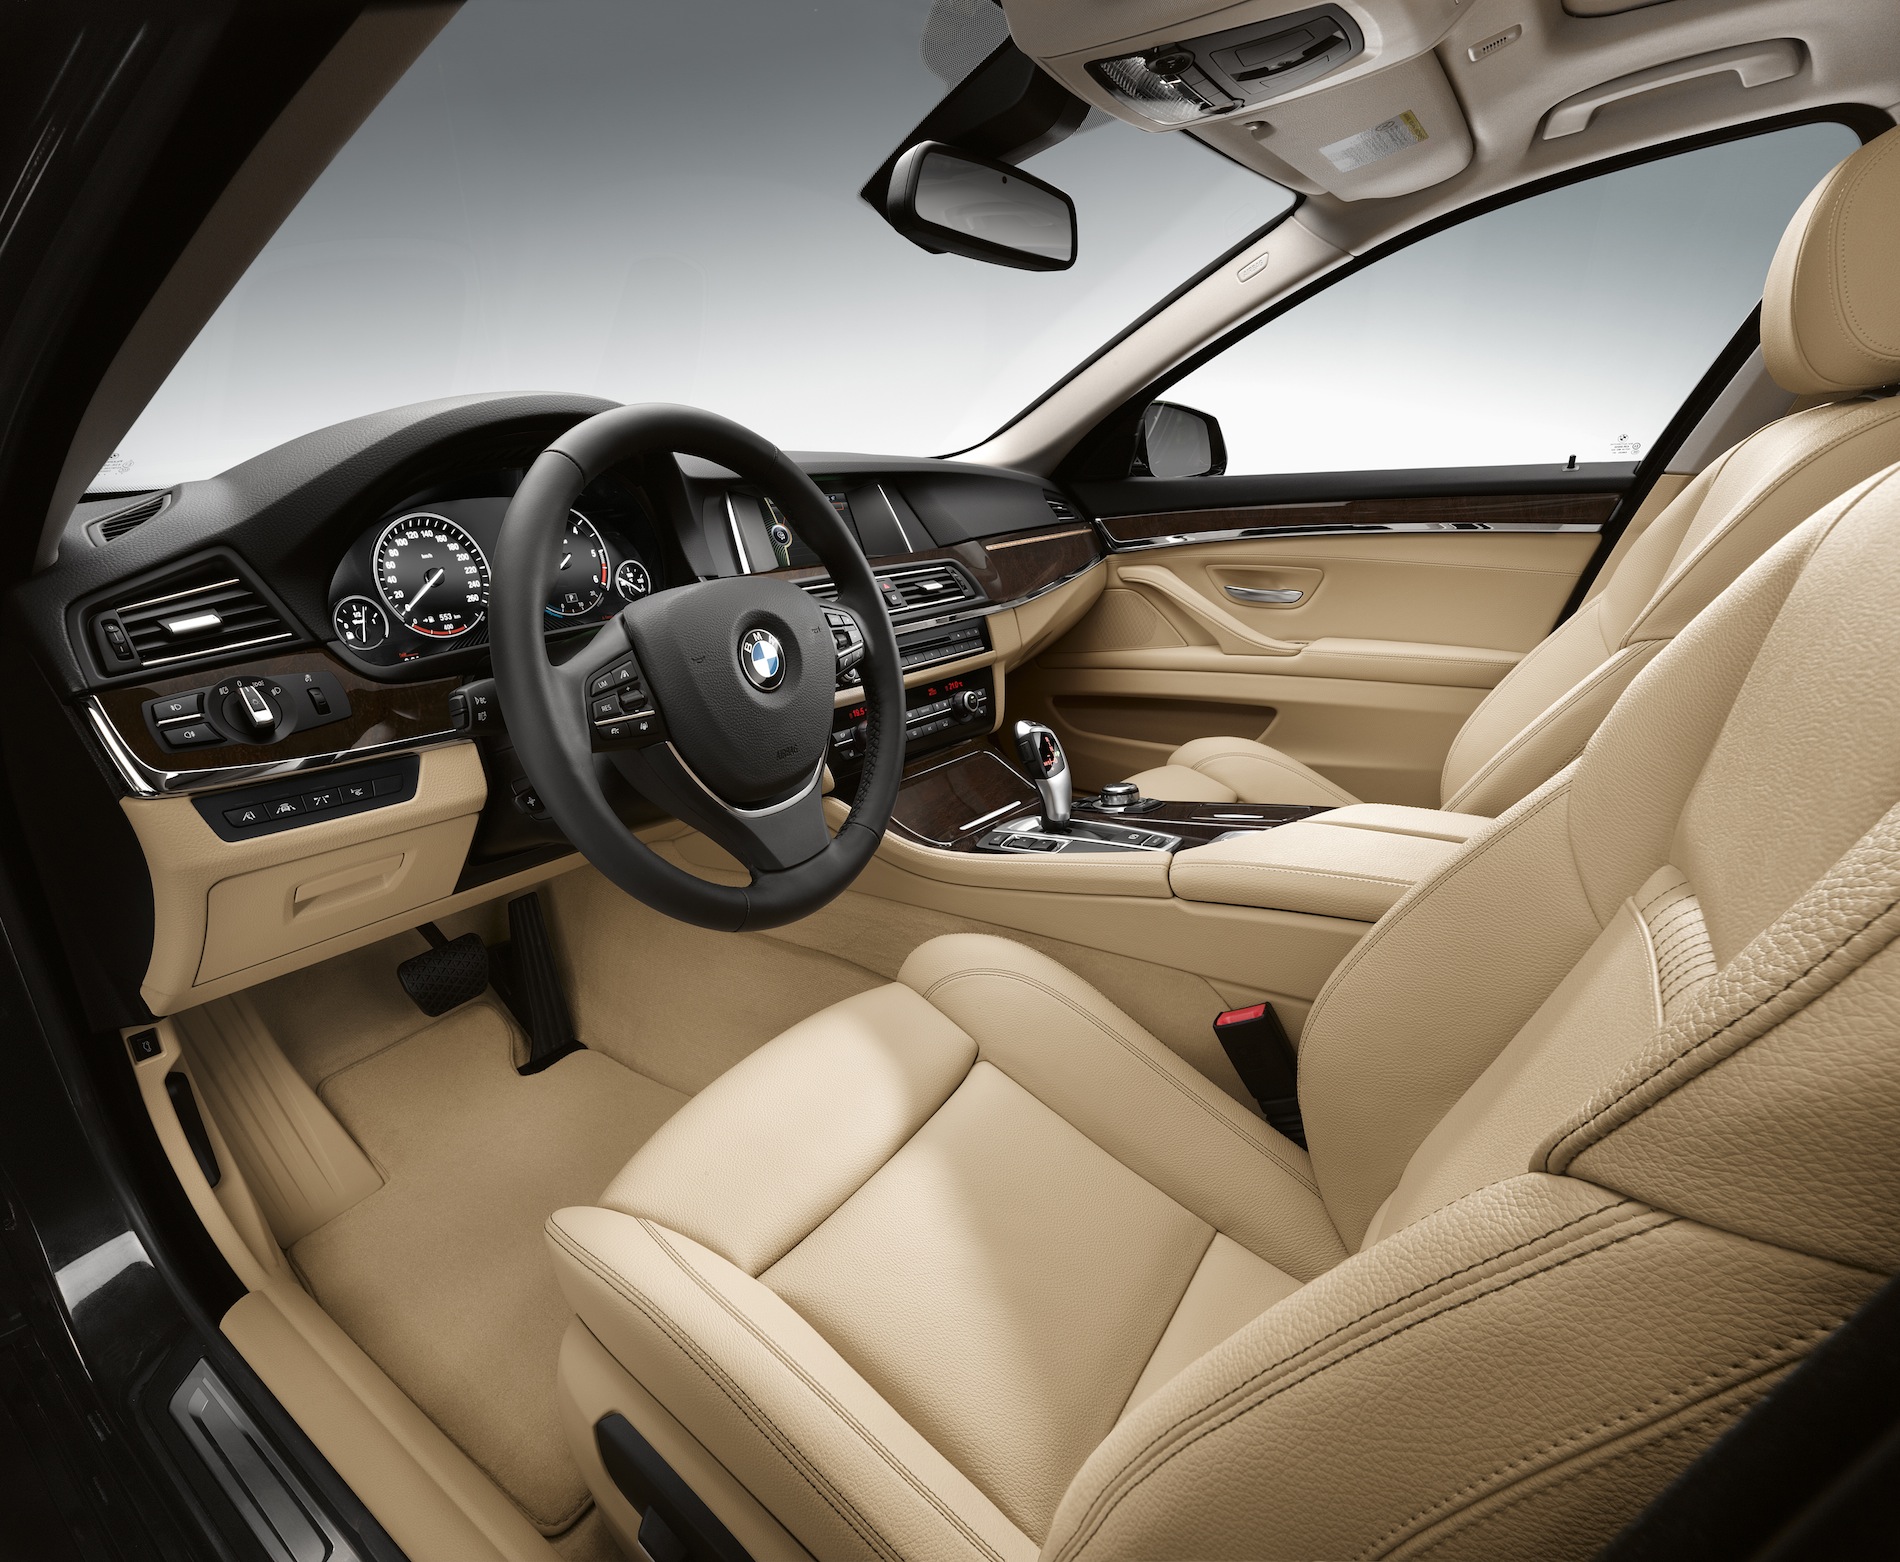 F10 BMW interior